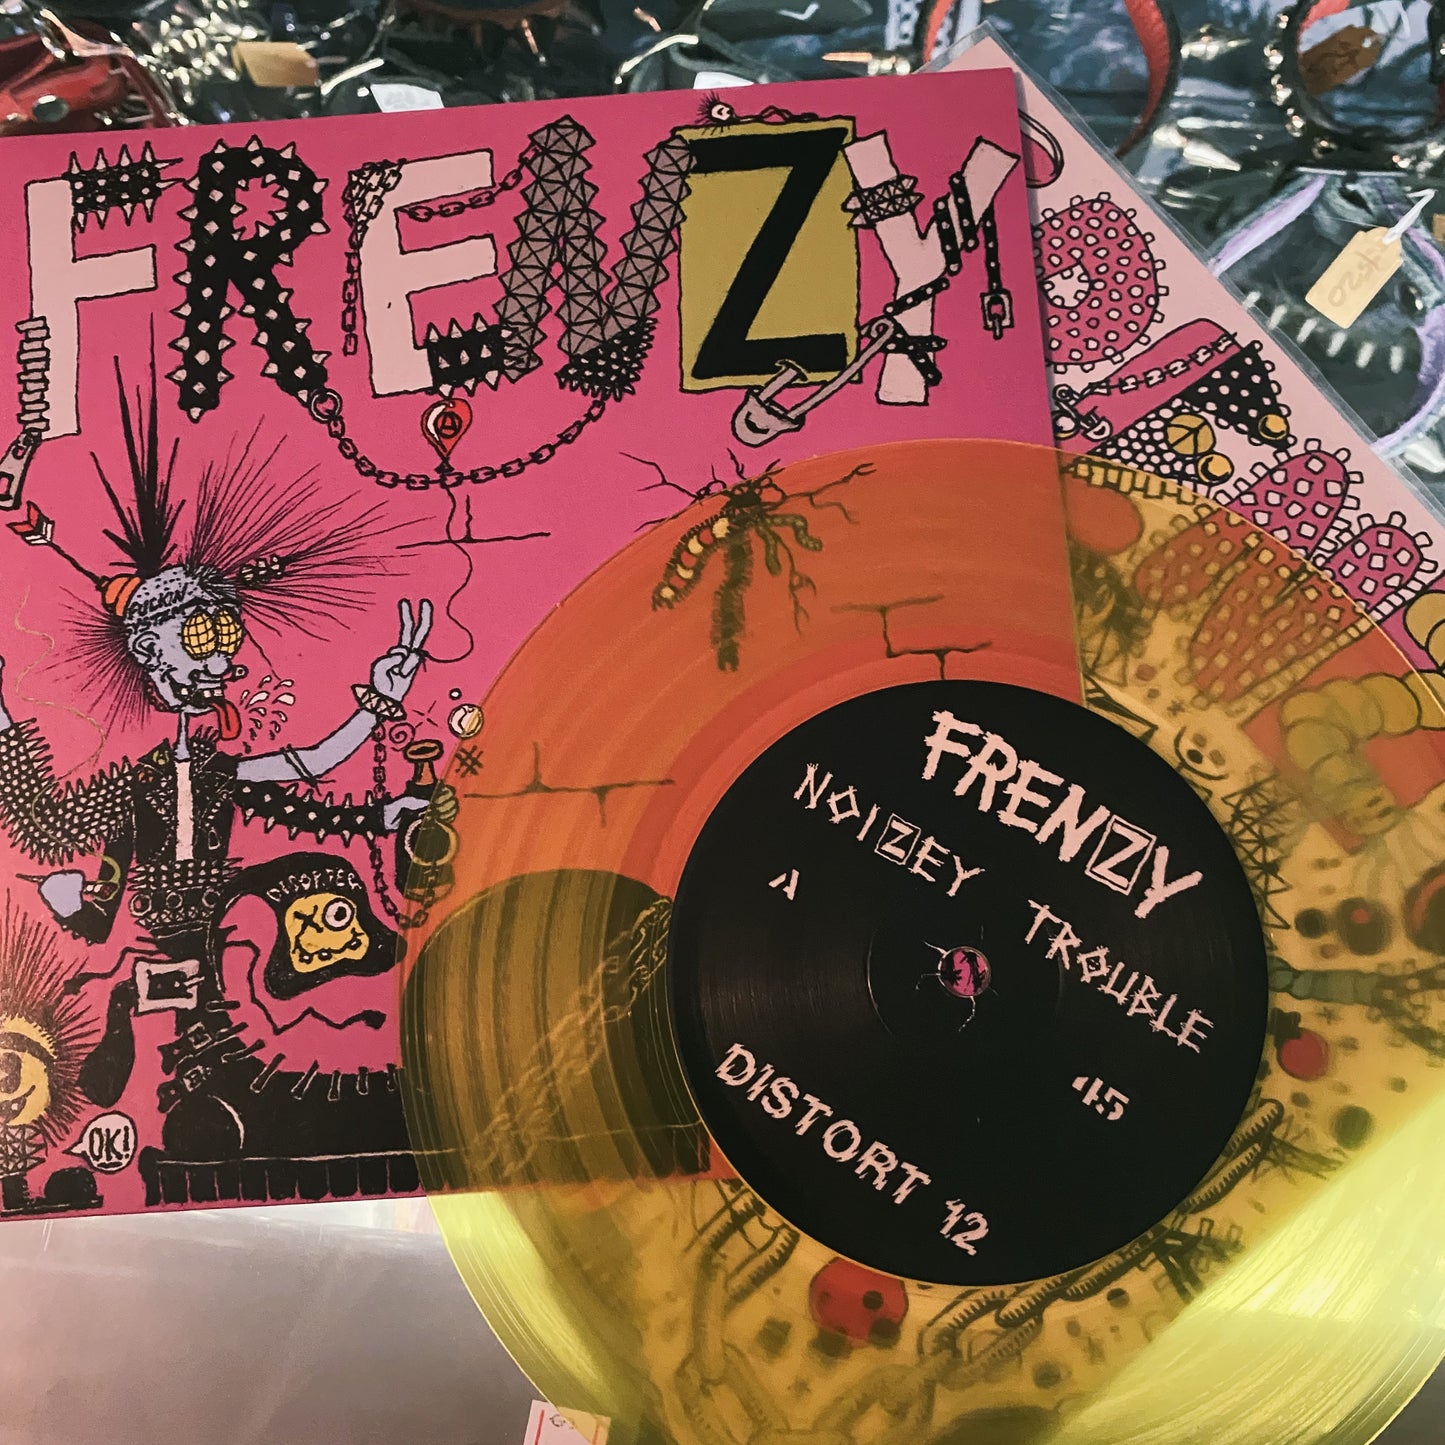 FRENZY – Noizey Trouble 7" (yellow translucent vinyl)